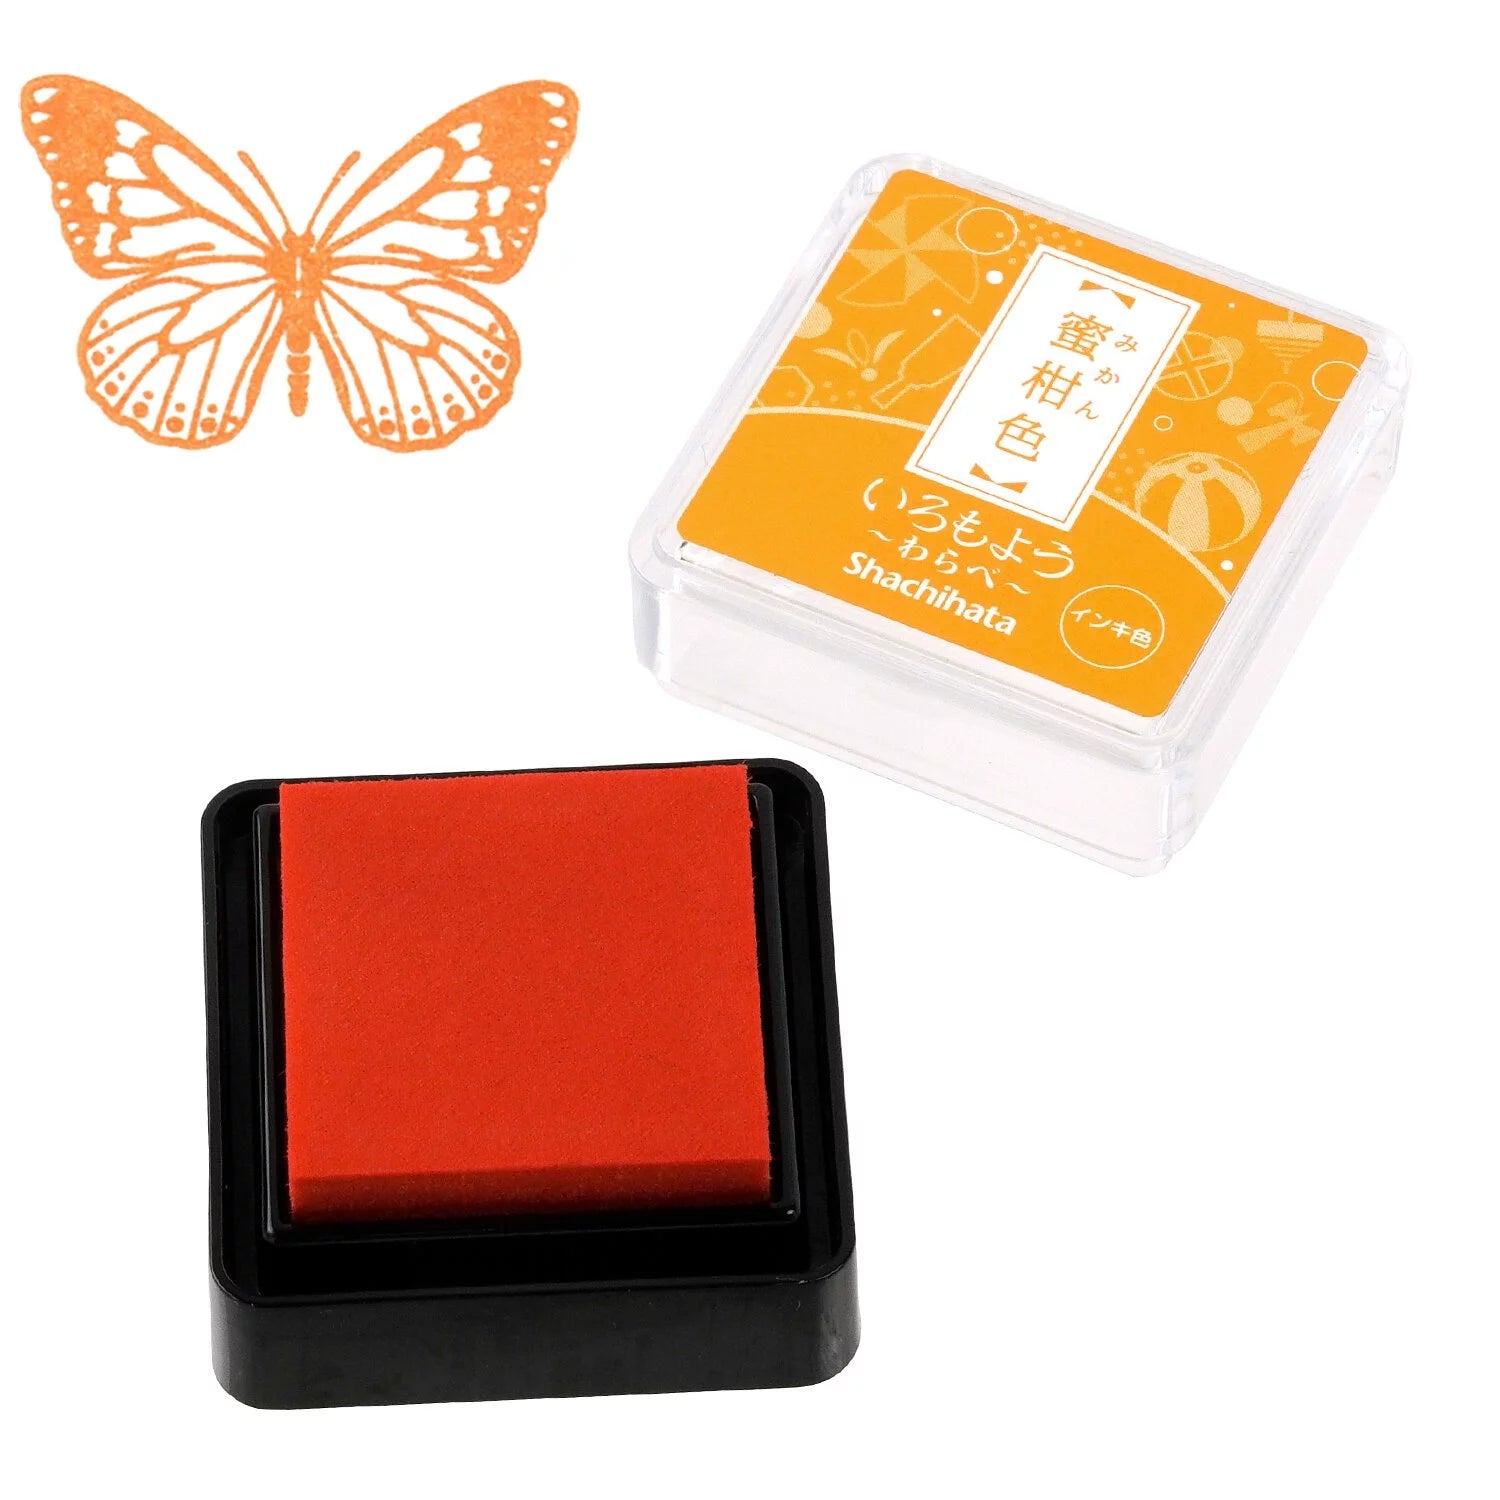 Iromoyo Warabe Mini Size Stamp Pad - S2 - Techo Treats